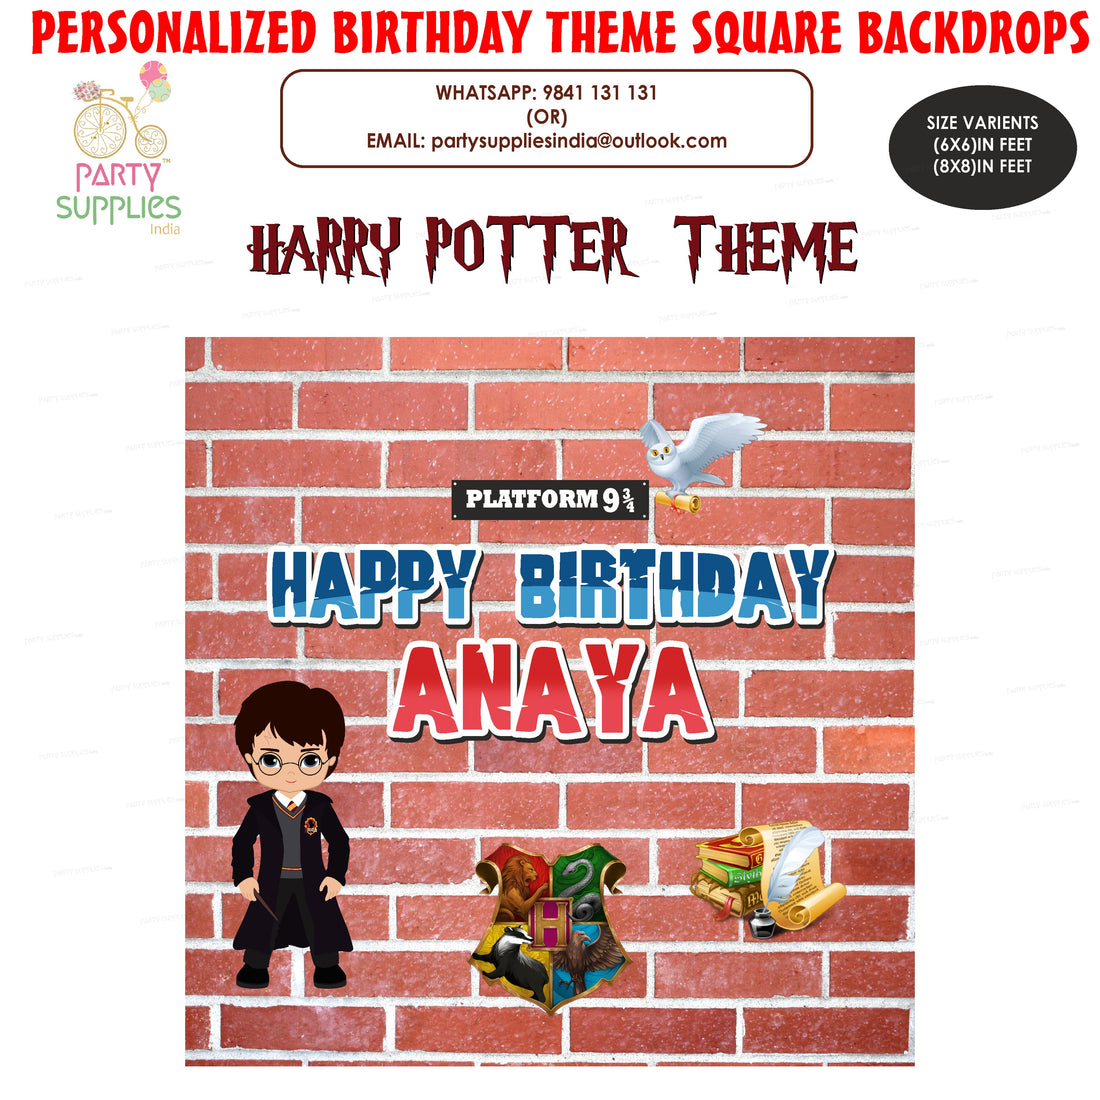 Harry Potter Theme Personalized Square Backdrop